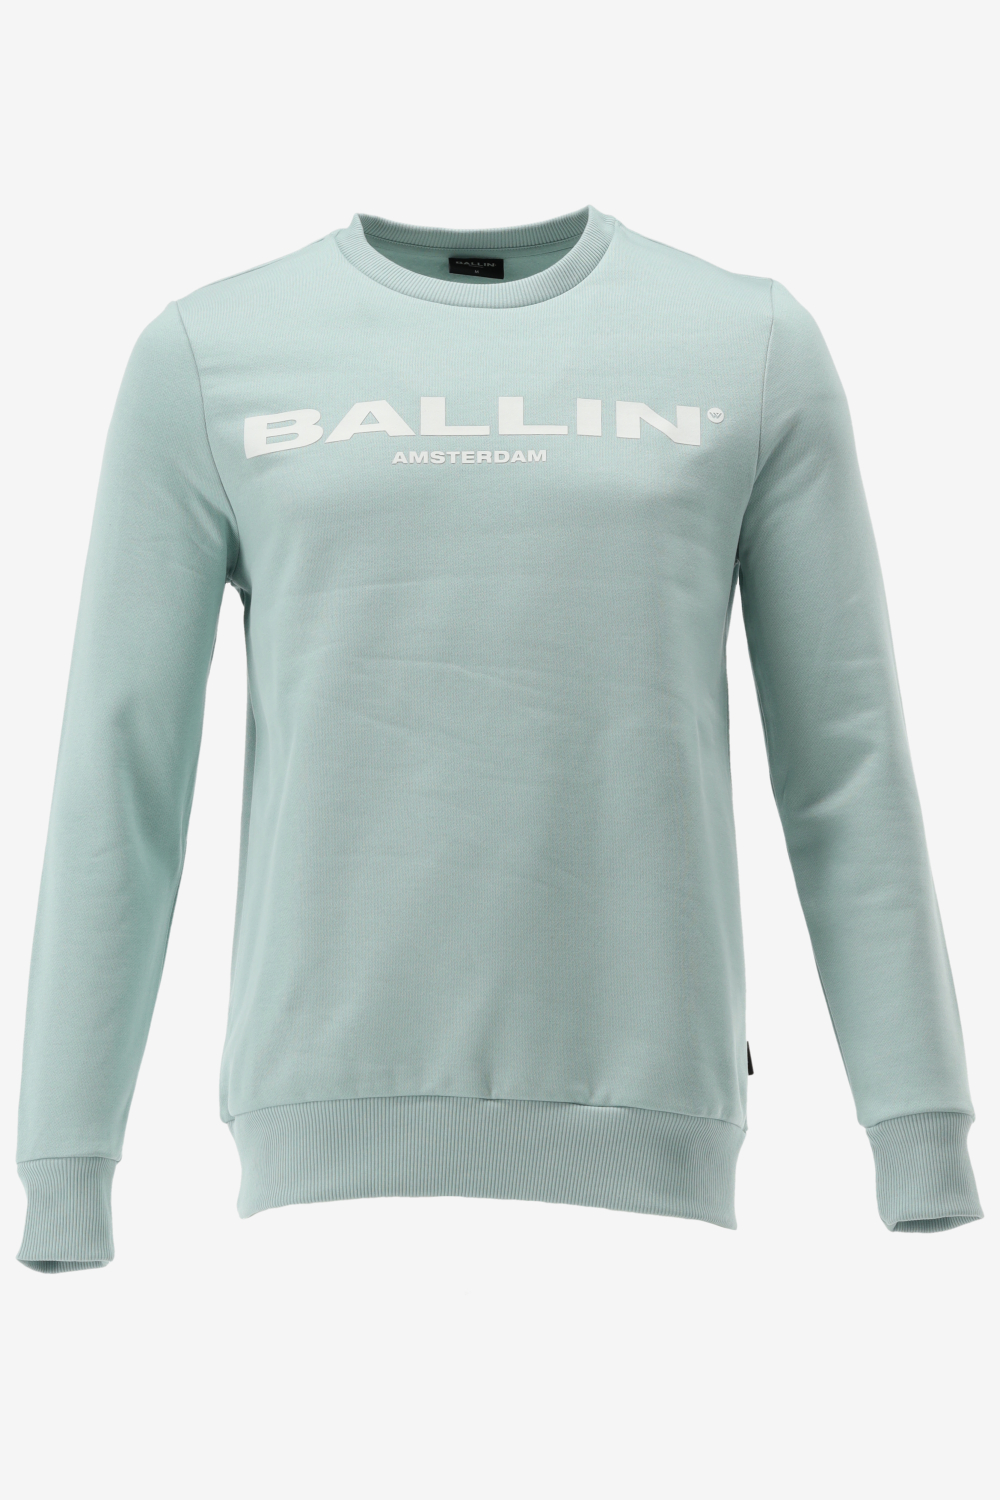 Ballin Amsterdam -  Heren Slim Fit  Original Sweater  - Groen - Maat XS